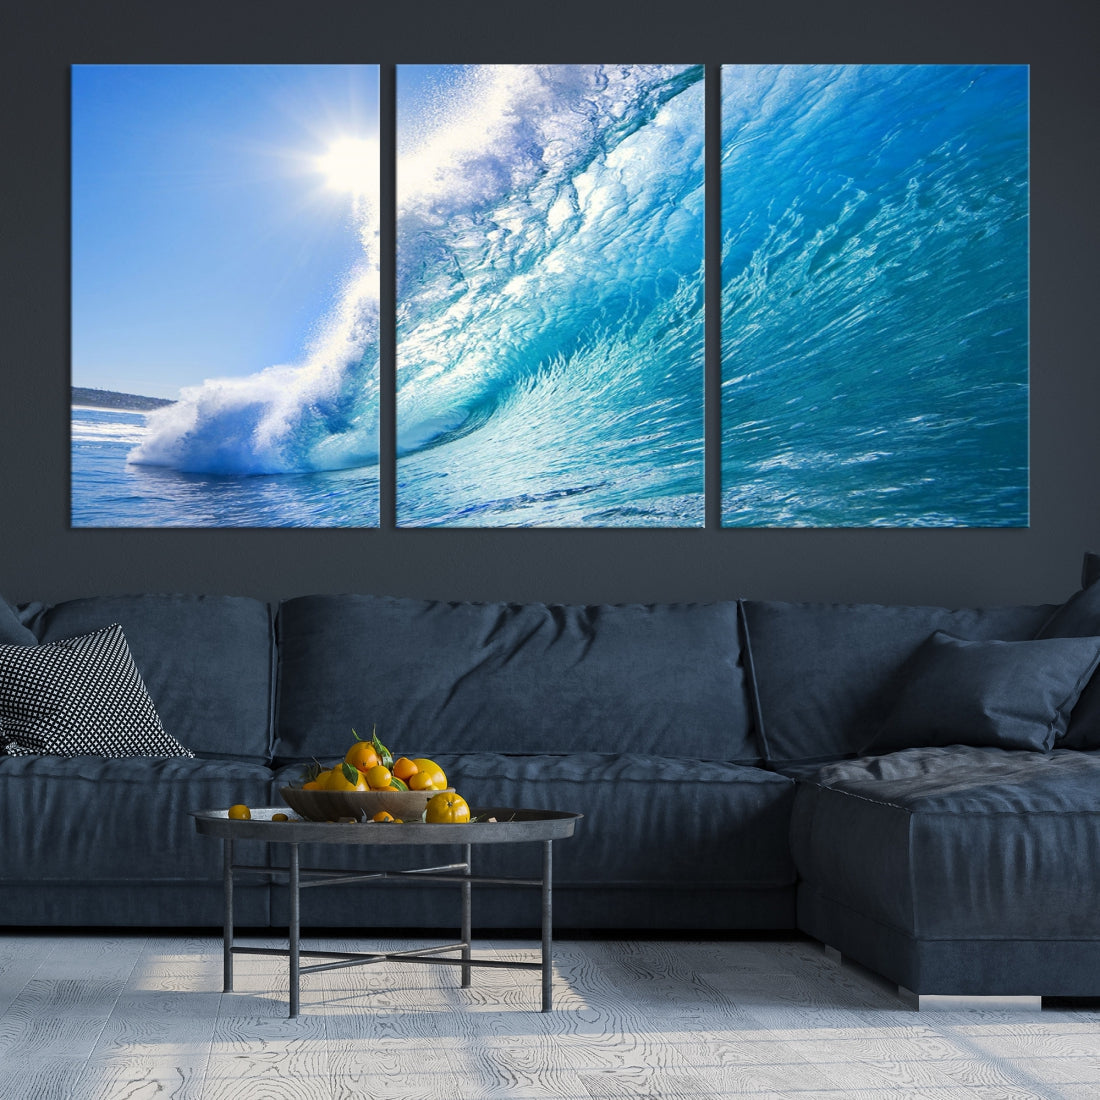 Surfing Wave Art Print Big Blue Ocean Canvas Wall Art for Living Room Decor